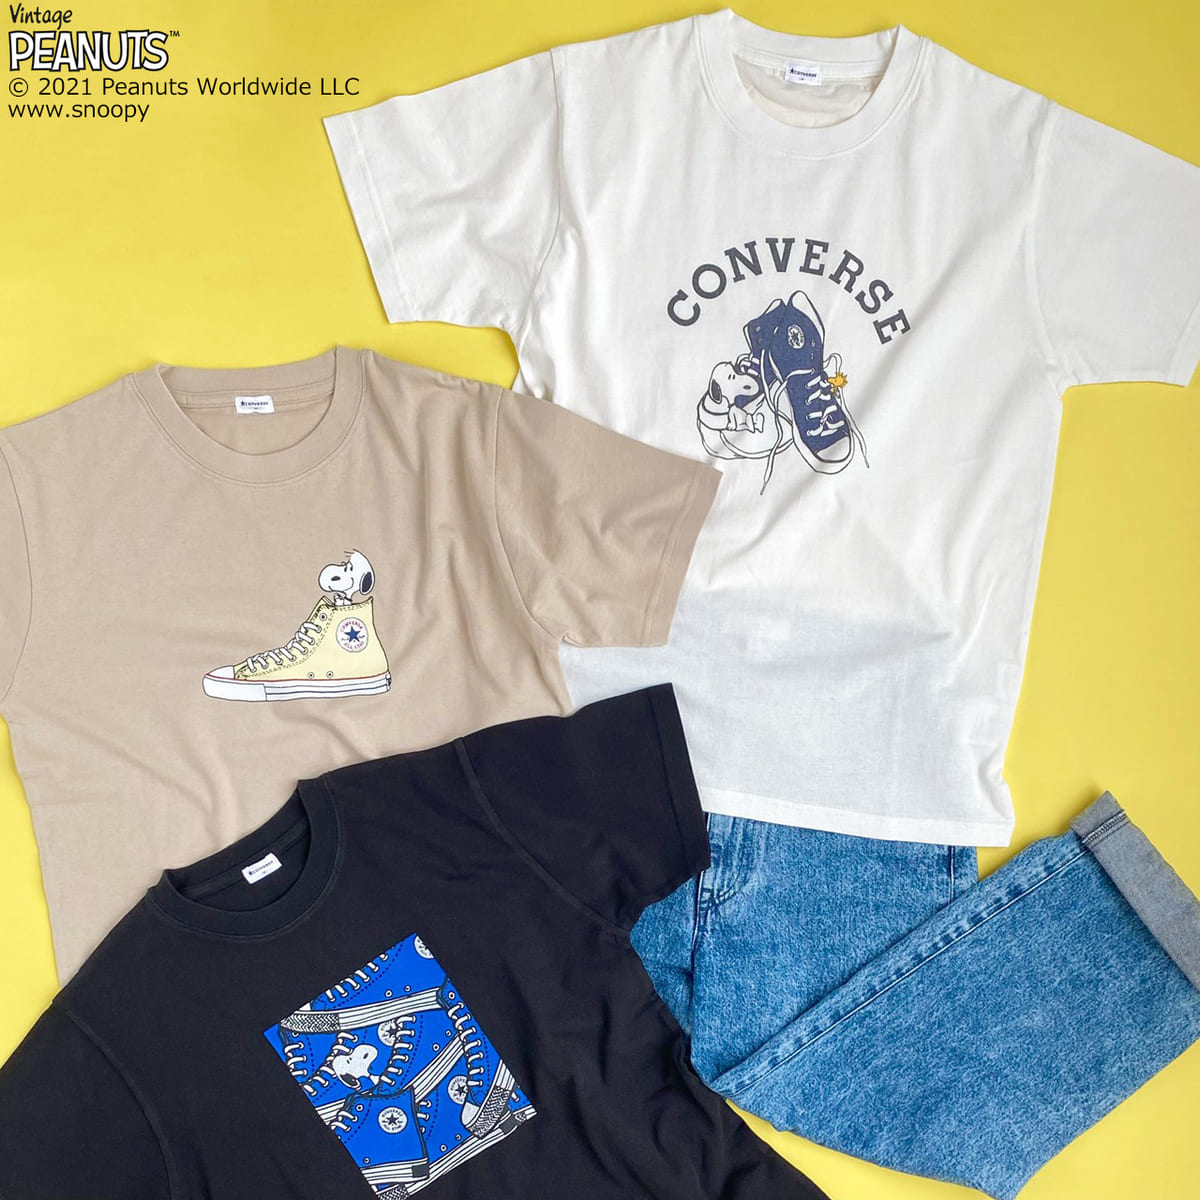 PLAZA「PEANUTS」×「CONVERSE(コンバース)」コラボレーションTシャツ